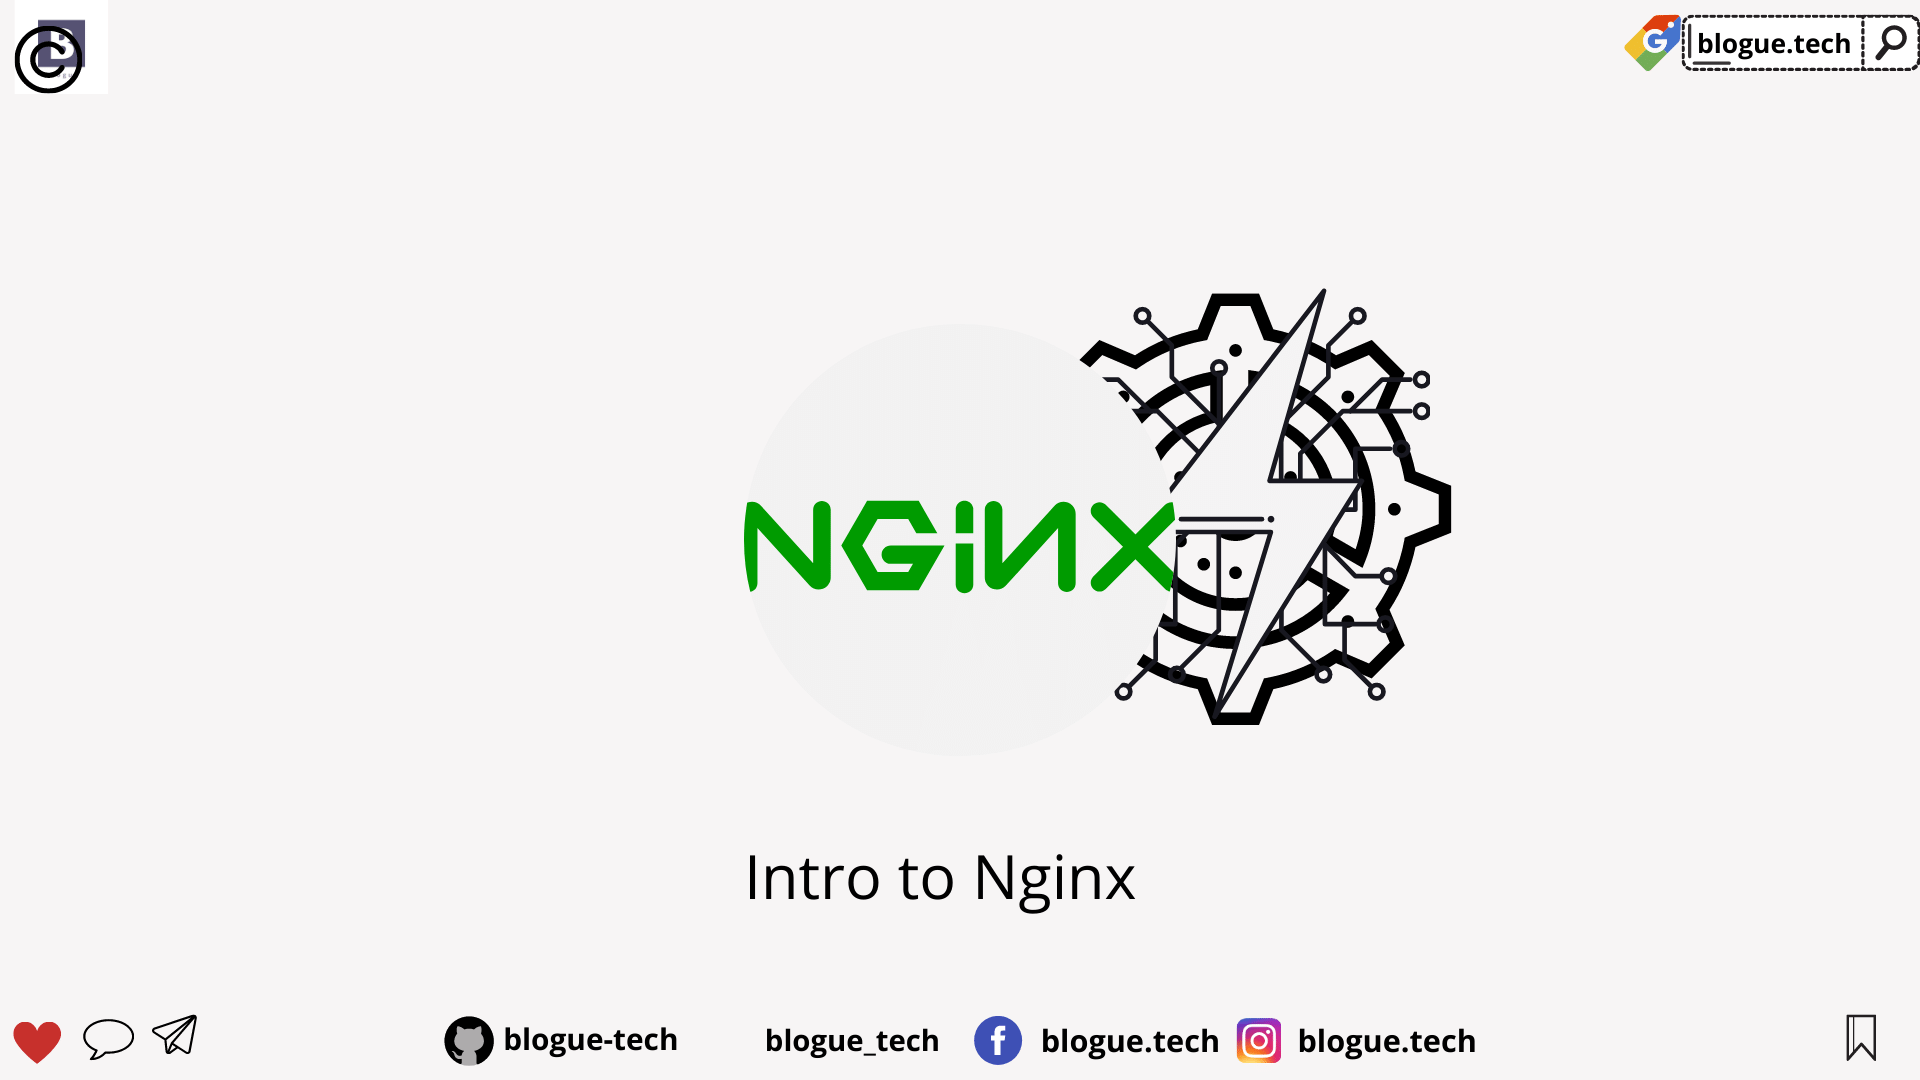 Intro to Nginx